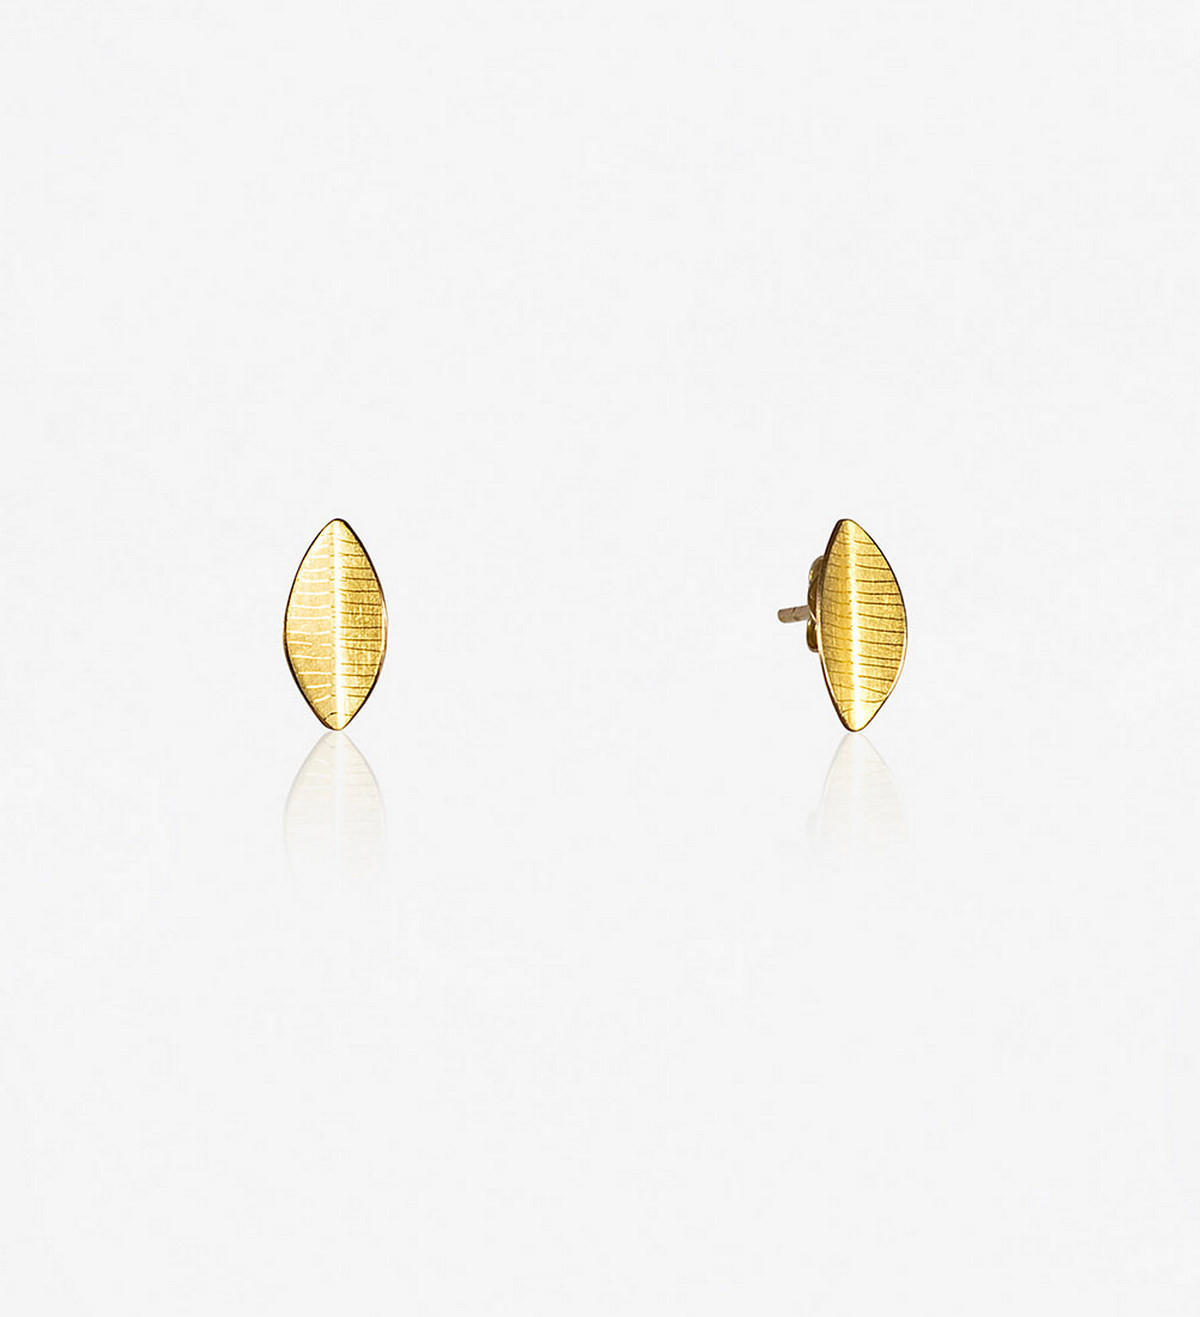 18k gold earrings Baladre 14mm